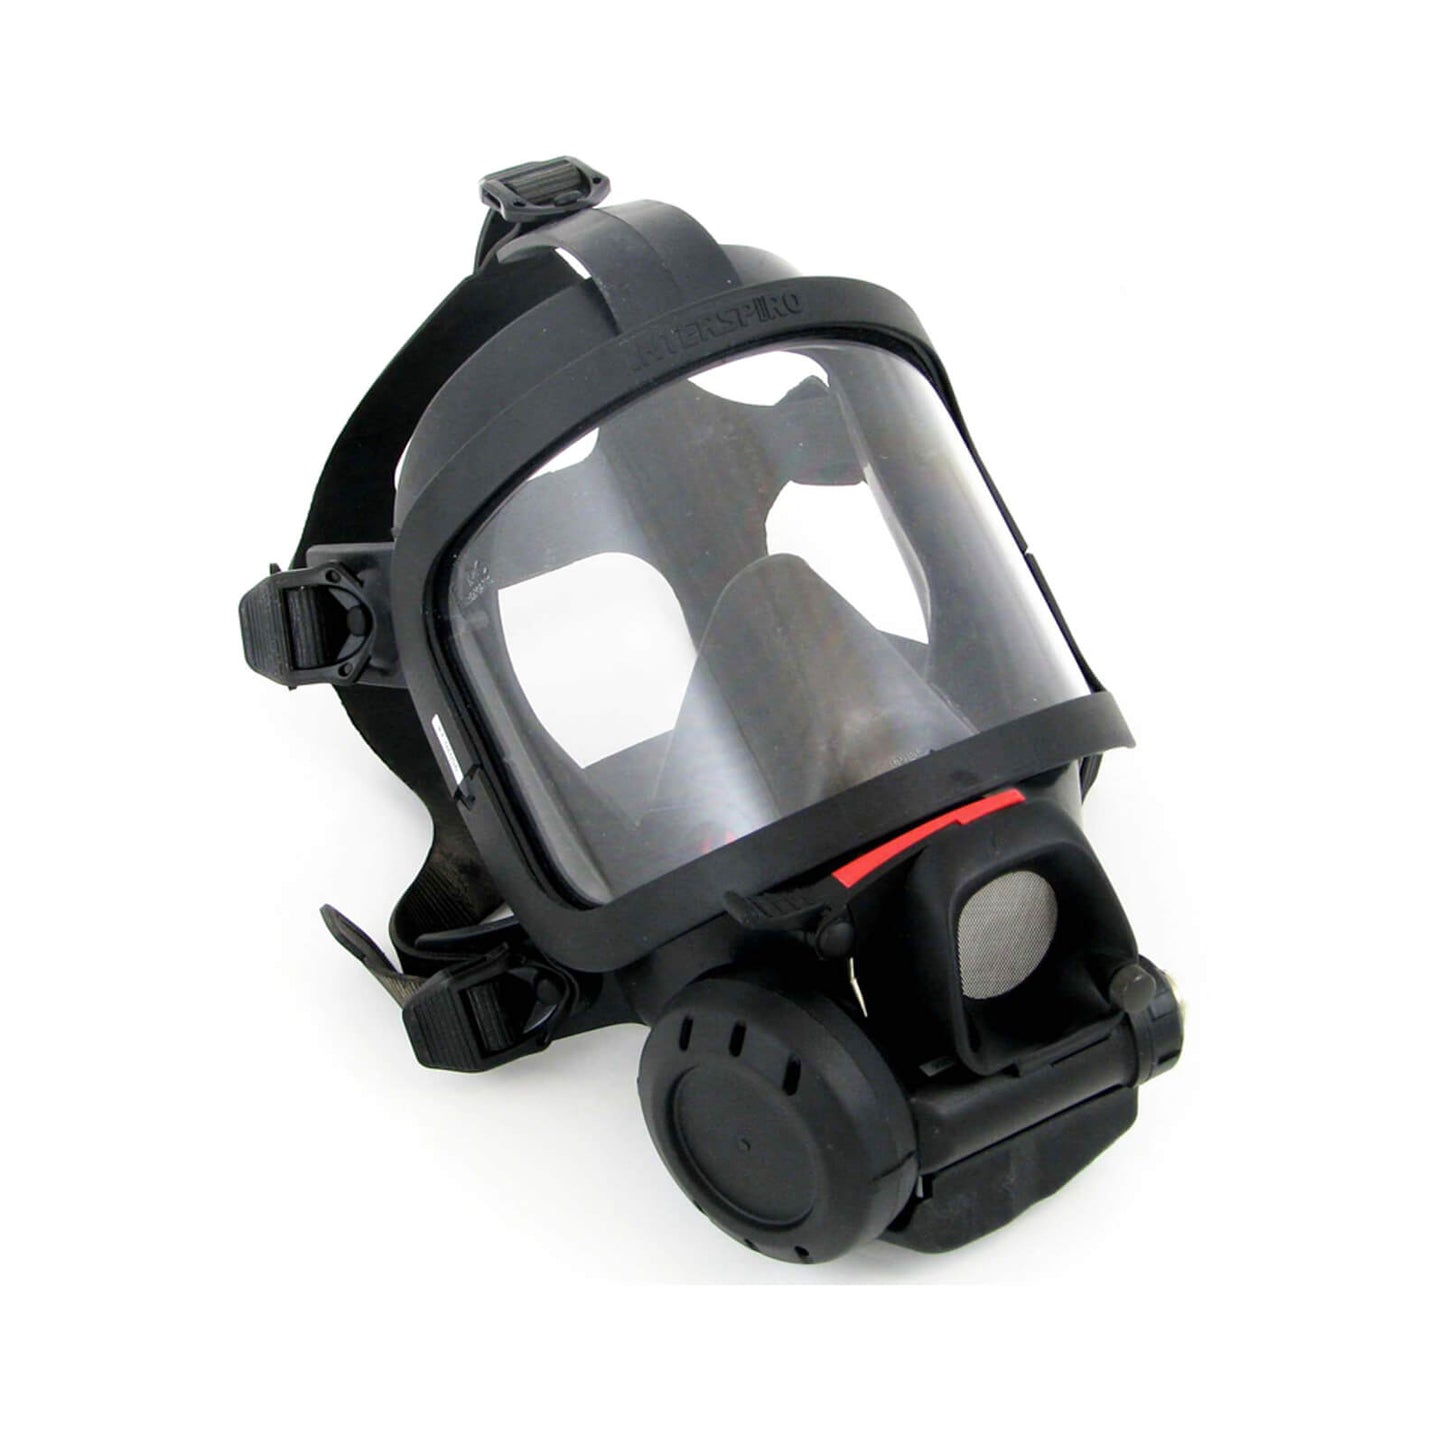 S-mask mask